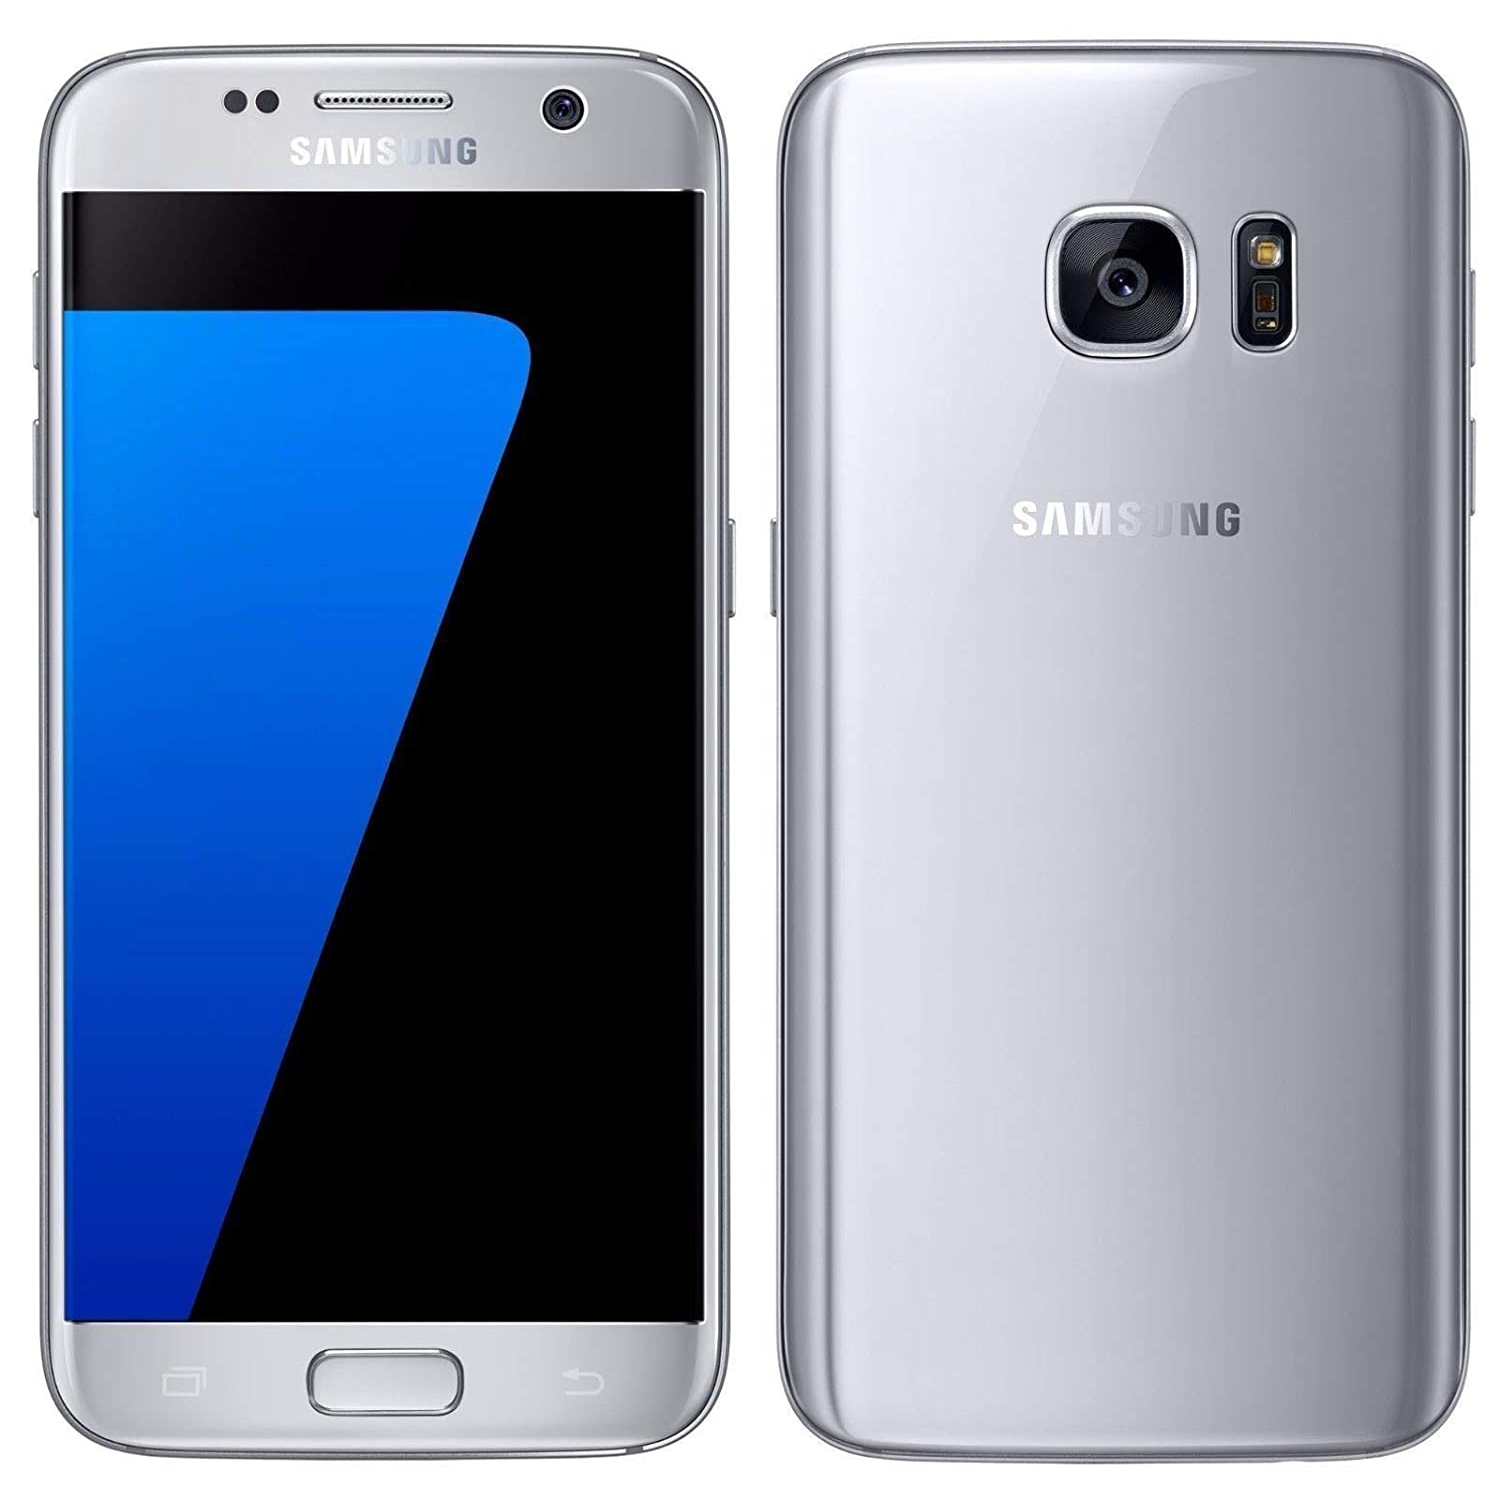 Samsung Galaxy S7 32GB Smartphone - Silver Titanium - Unlocked - Open Box